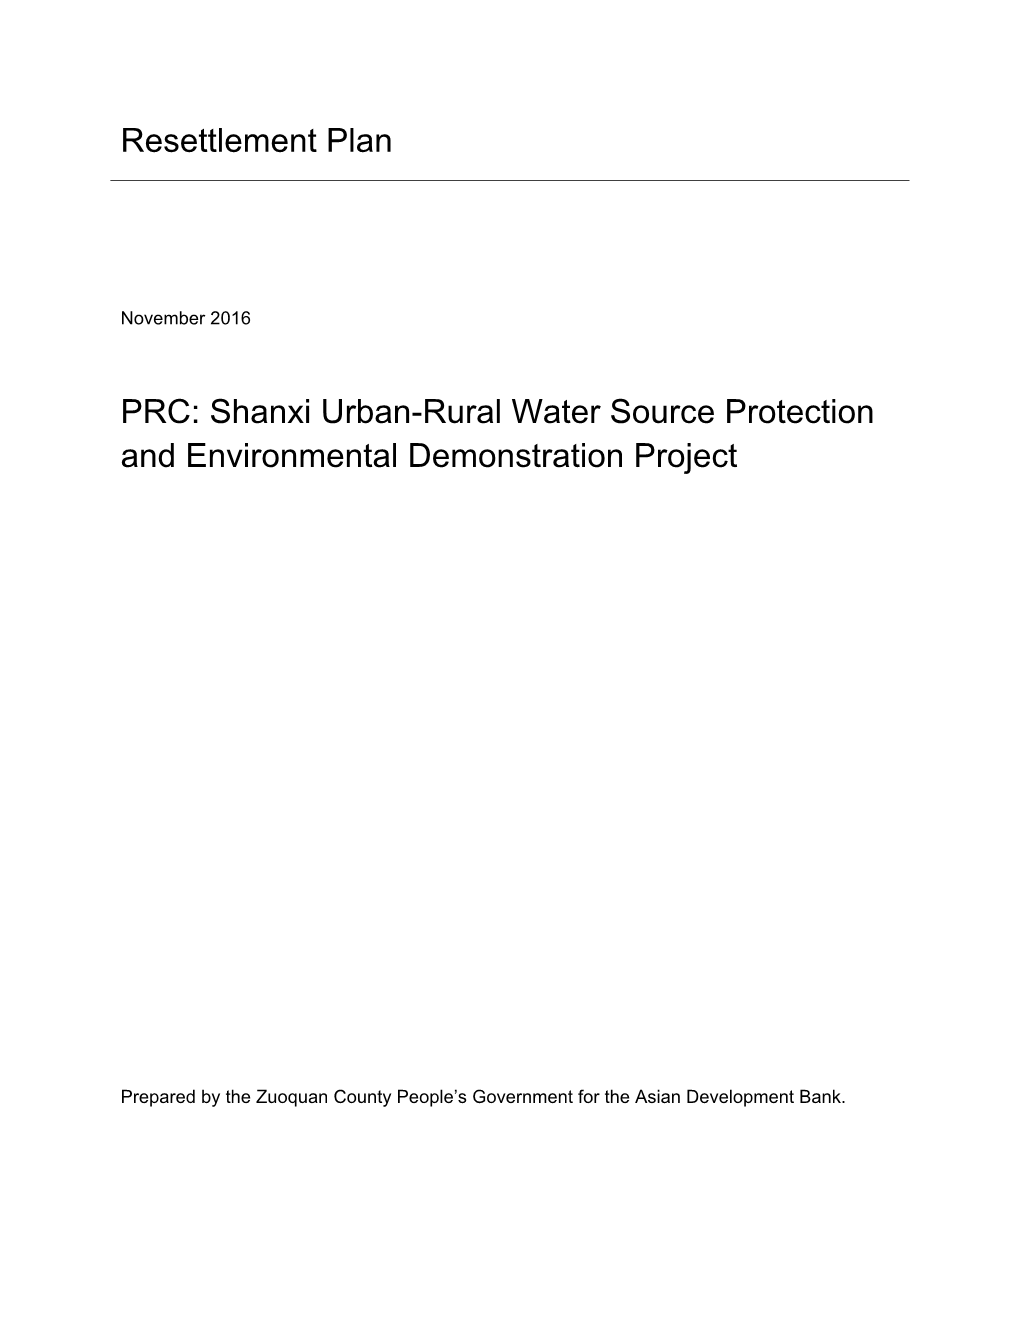 Resettlement Plan PRC: Shanxi Urban-Rural Water Source